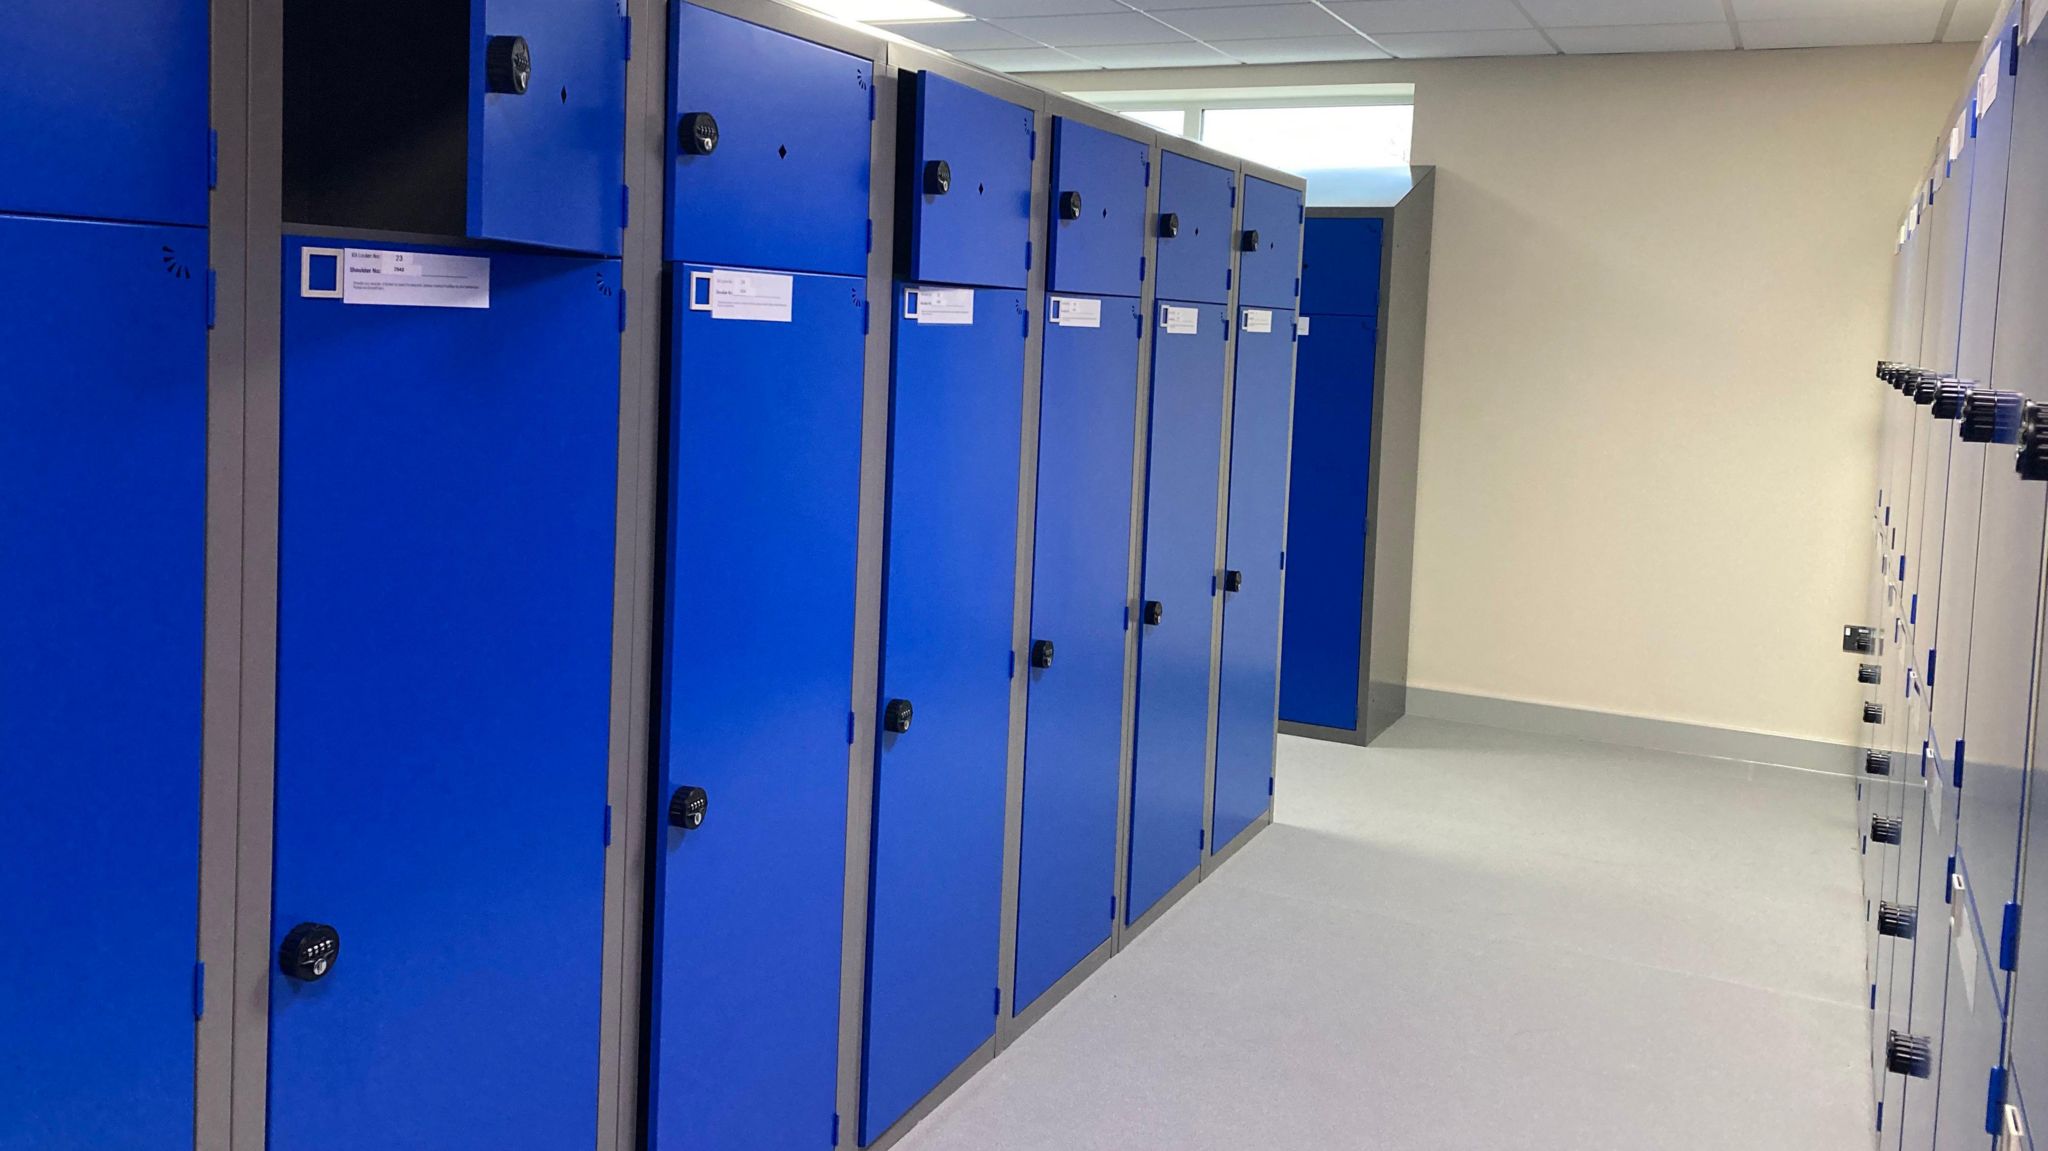 A row of blue full-length lockers